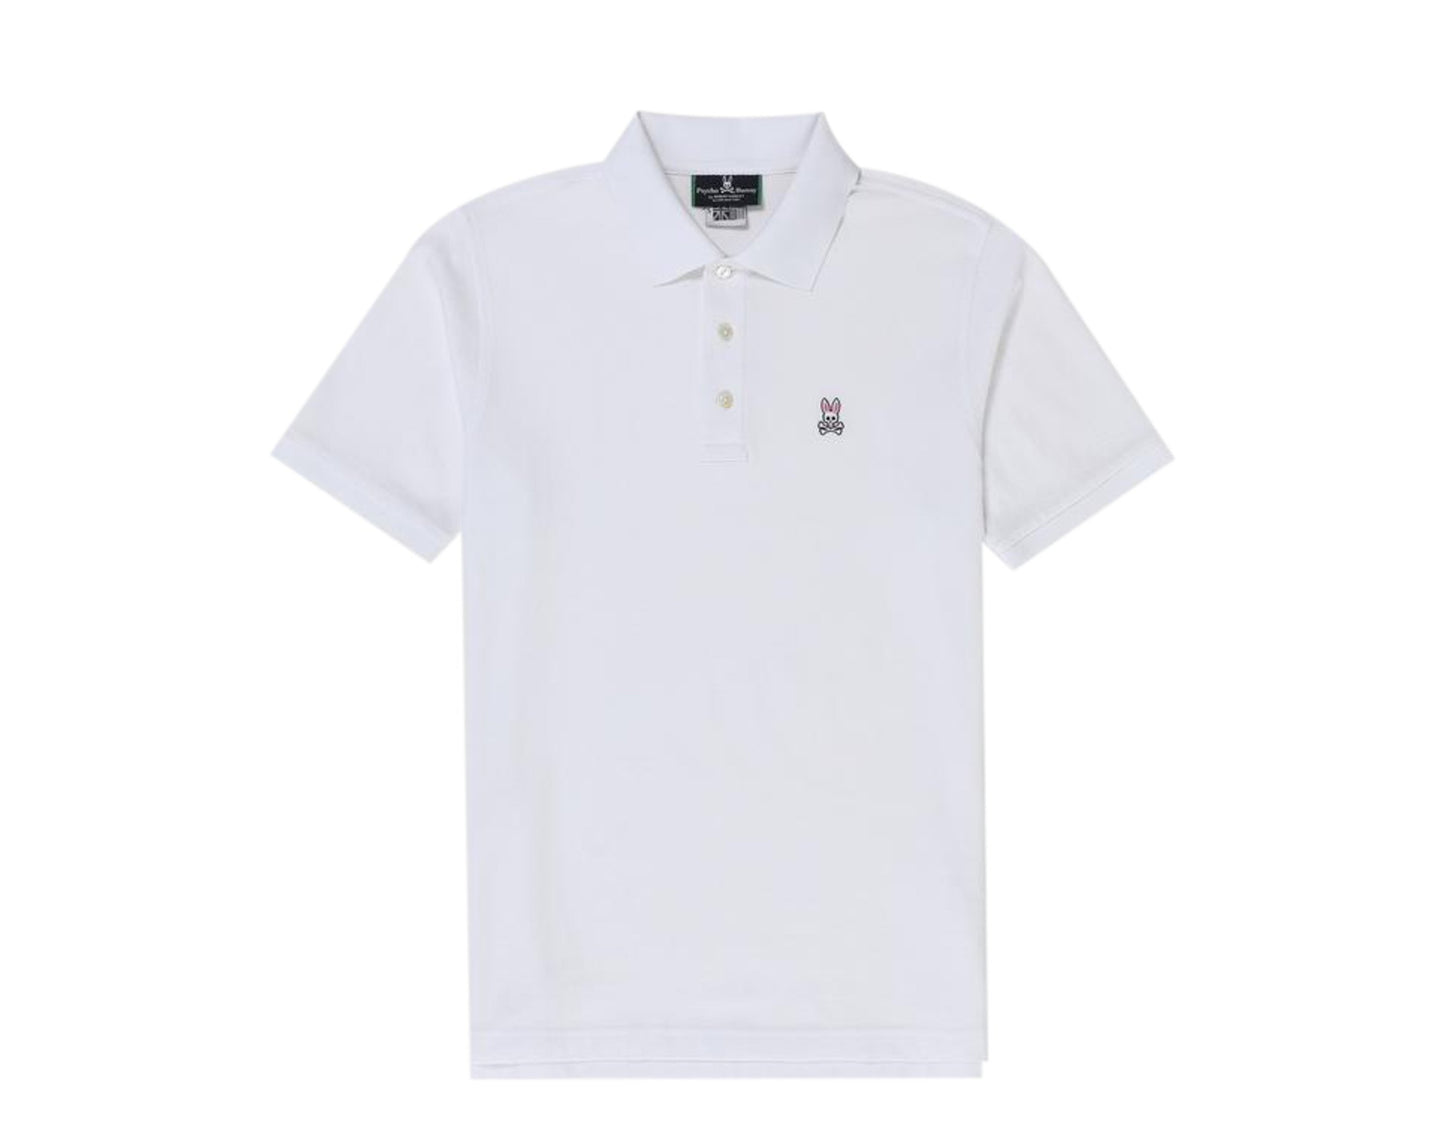 Psycho Bunny Seacroft Sports Polo White Men's Golf Shirt B6K837ARPB-WHT